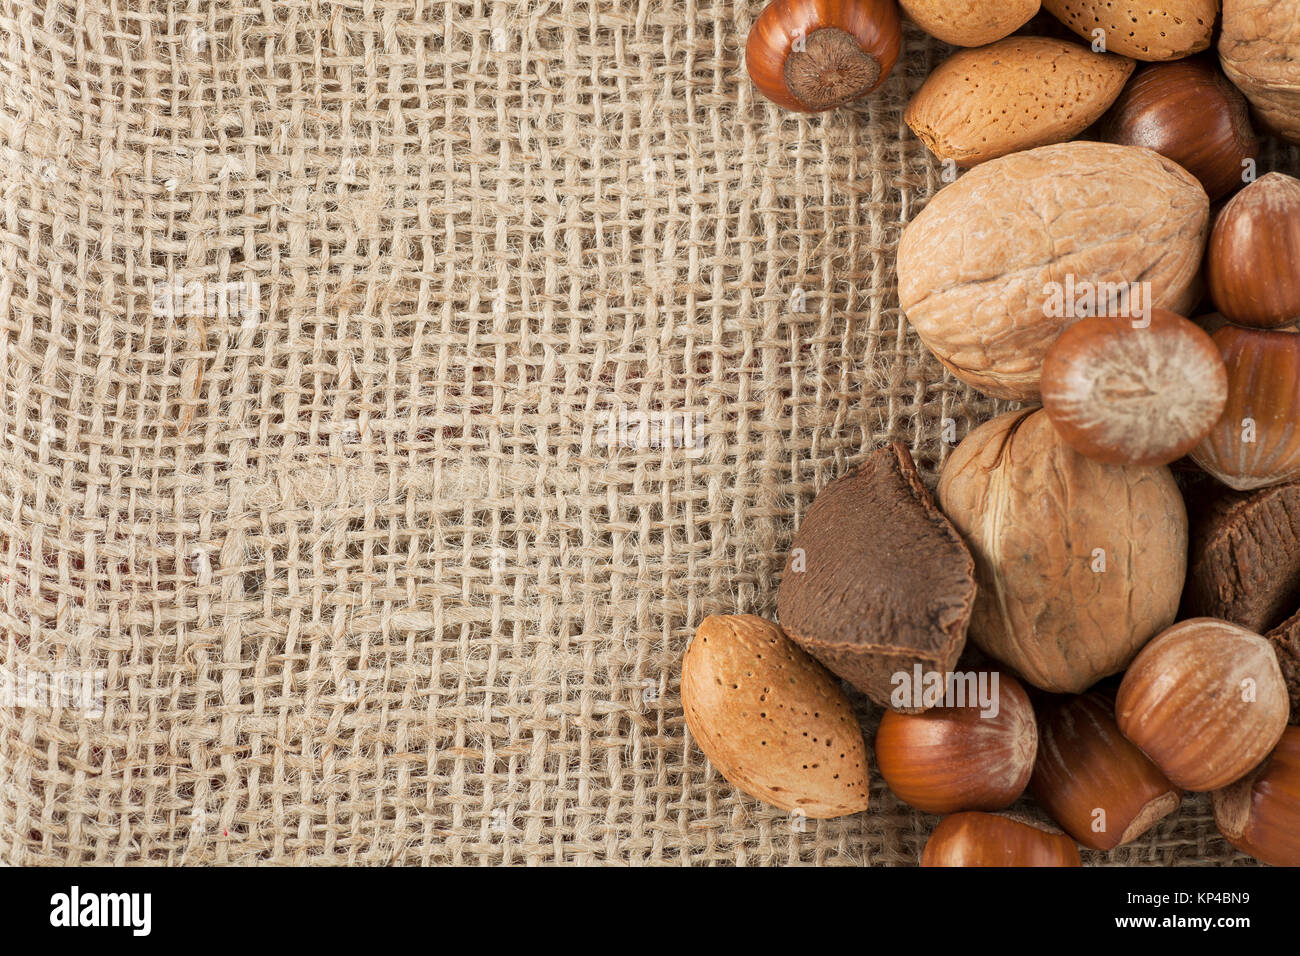 Whole unshelled hazelnuts, walnuts, amonds and brazilnuts  on burlap sack with copy space Stock Photo